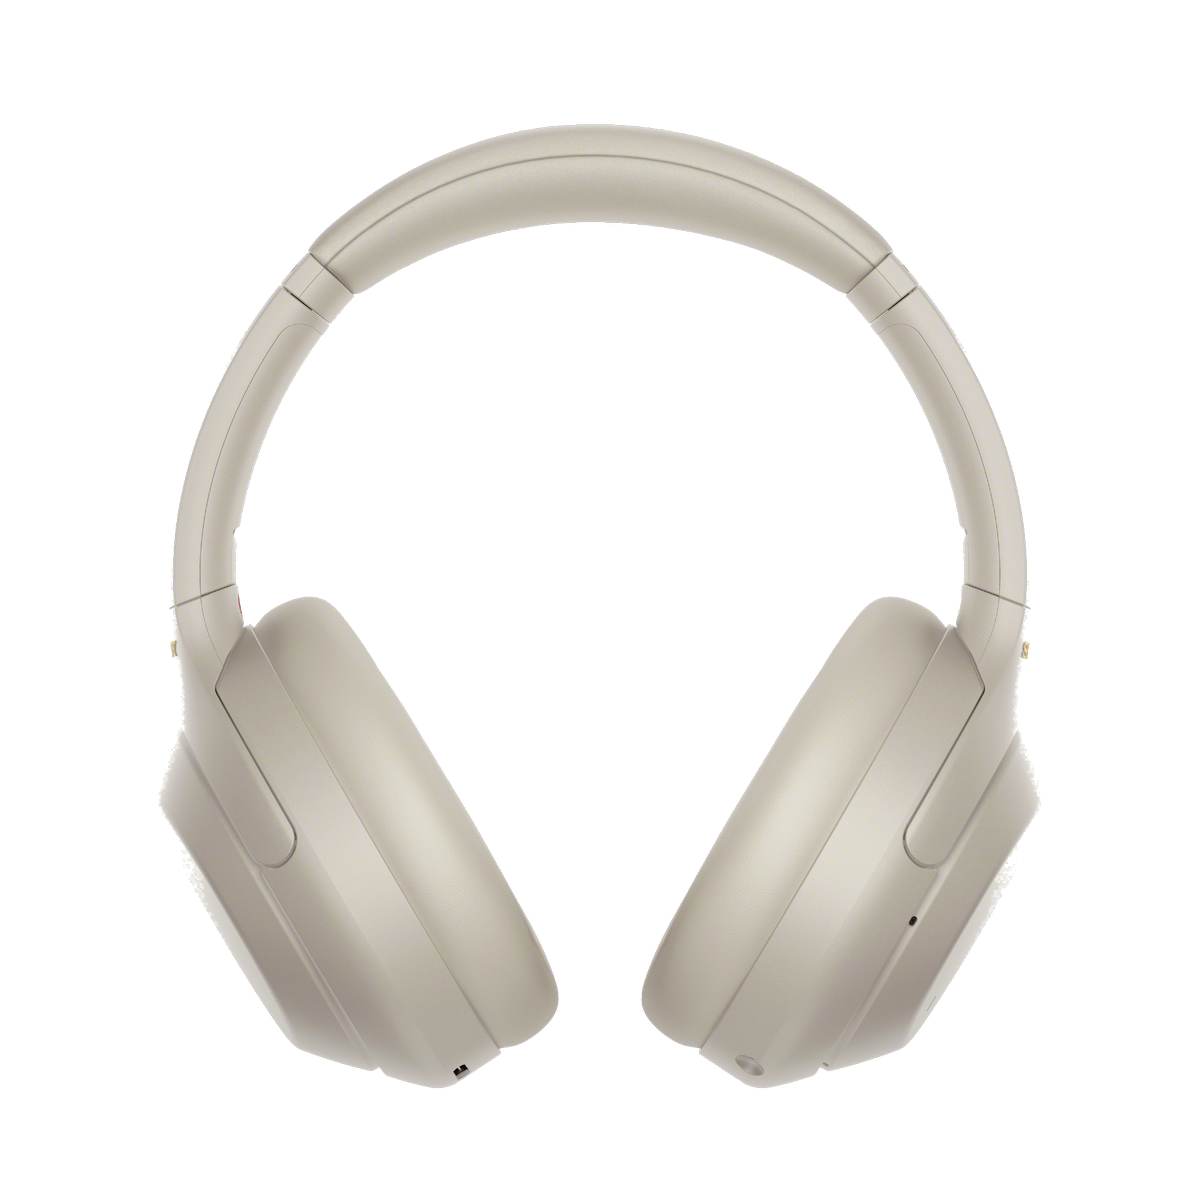 Auriculares inalámbricos - Sony WH-1000XM4S, De diadema, BT, Cancelación ruido, Autonomía 30h, Hi-Res, Plata